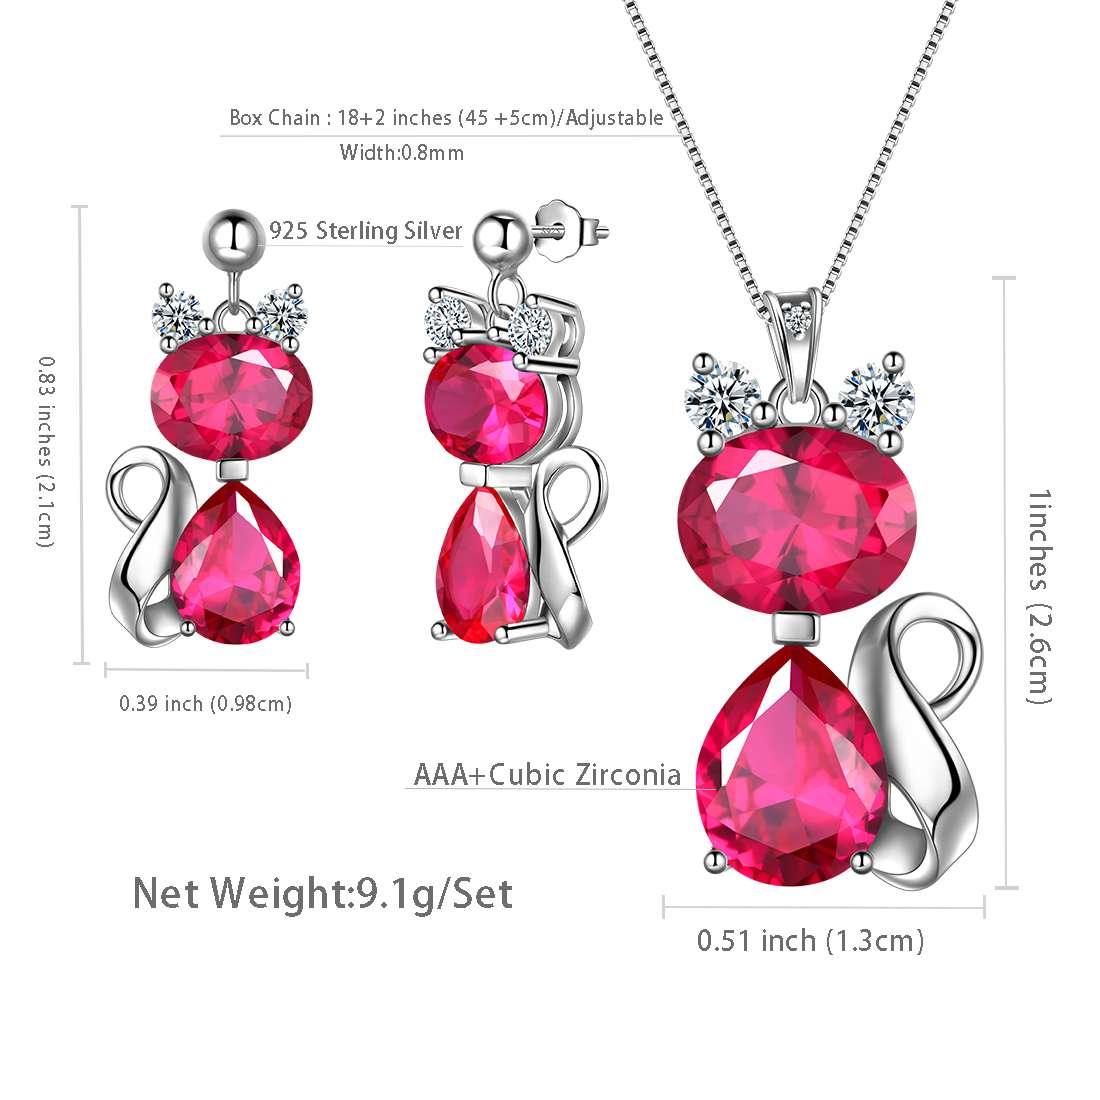 Cats Necklace Earrings Jewelry July Ruby Birthstone - Jewelry Set - Aurora Tears Jewelry